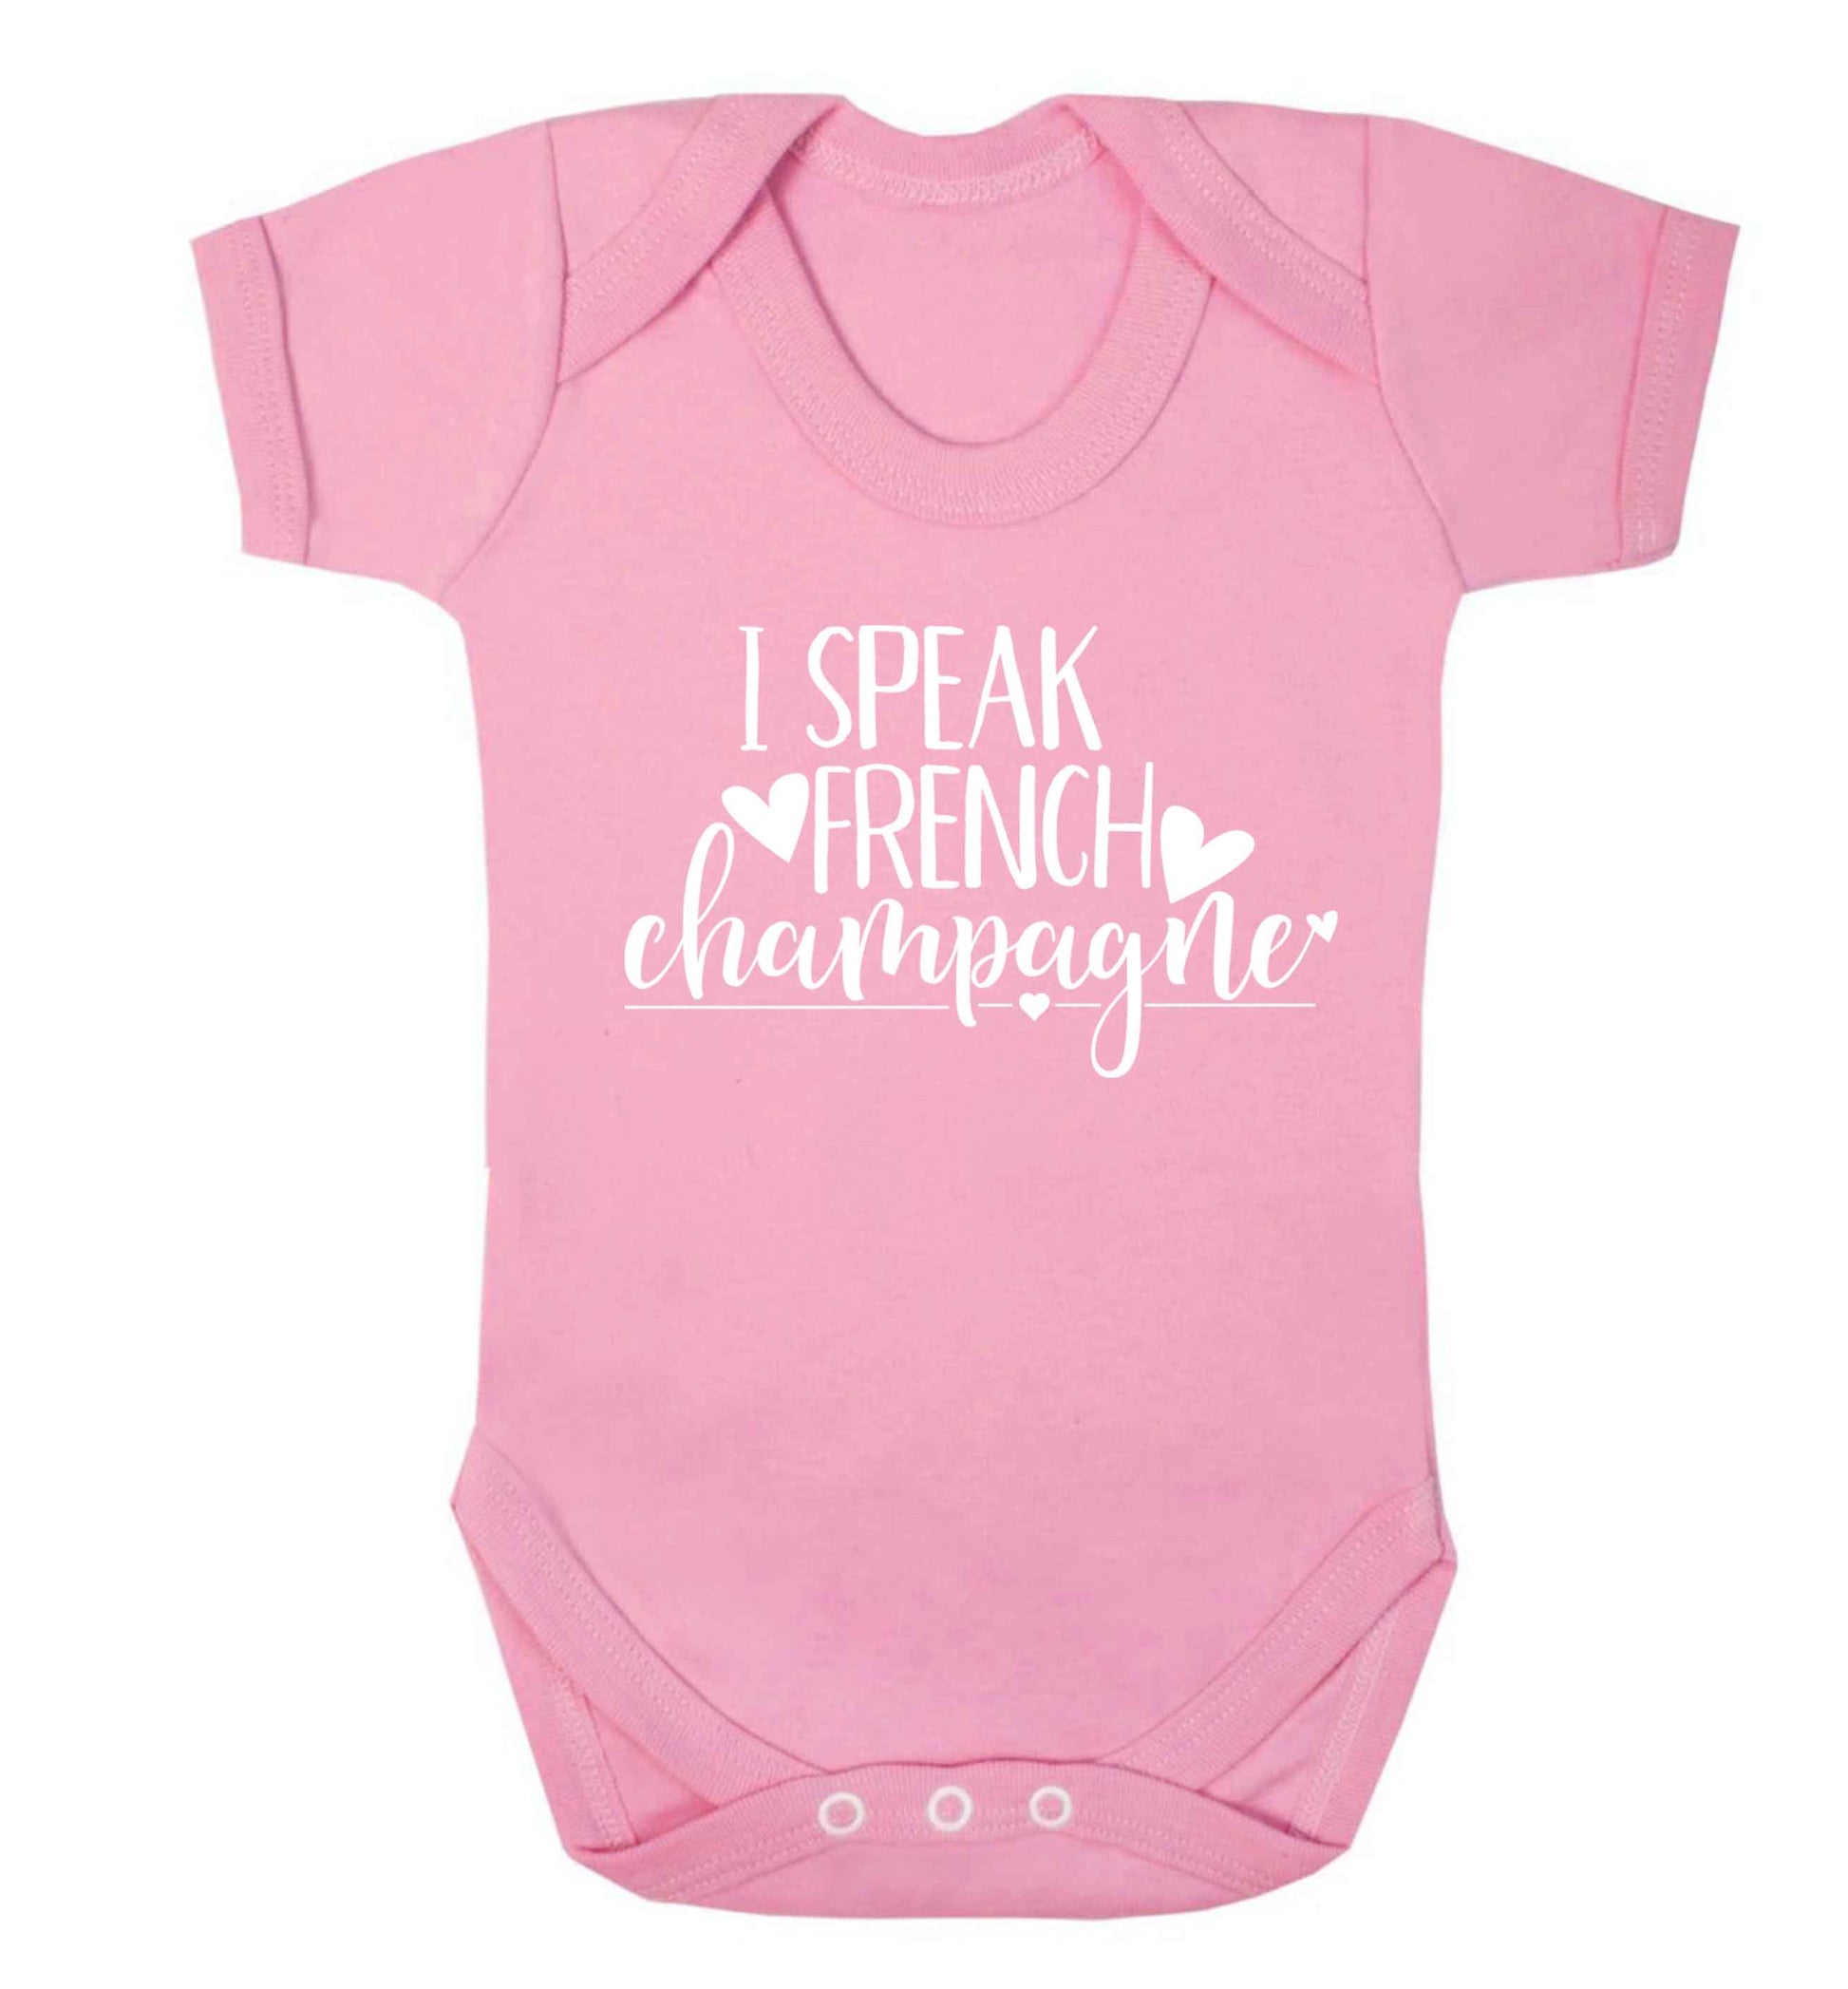 I speak french champagne Baby Vest pale pink 18-24 months